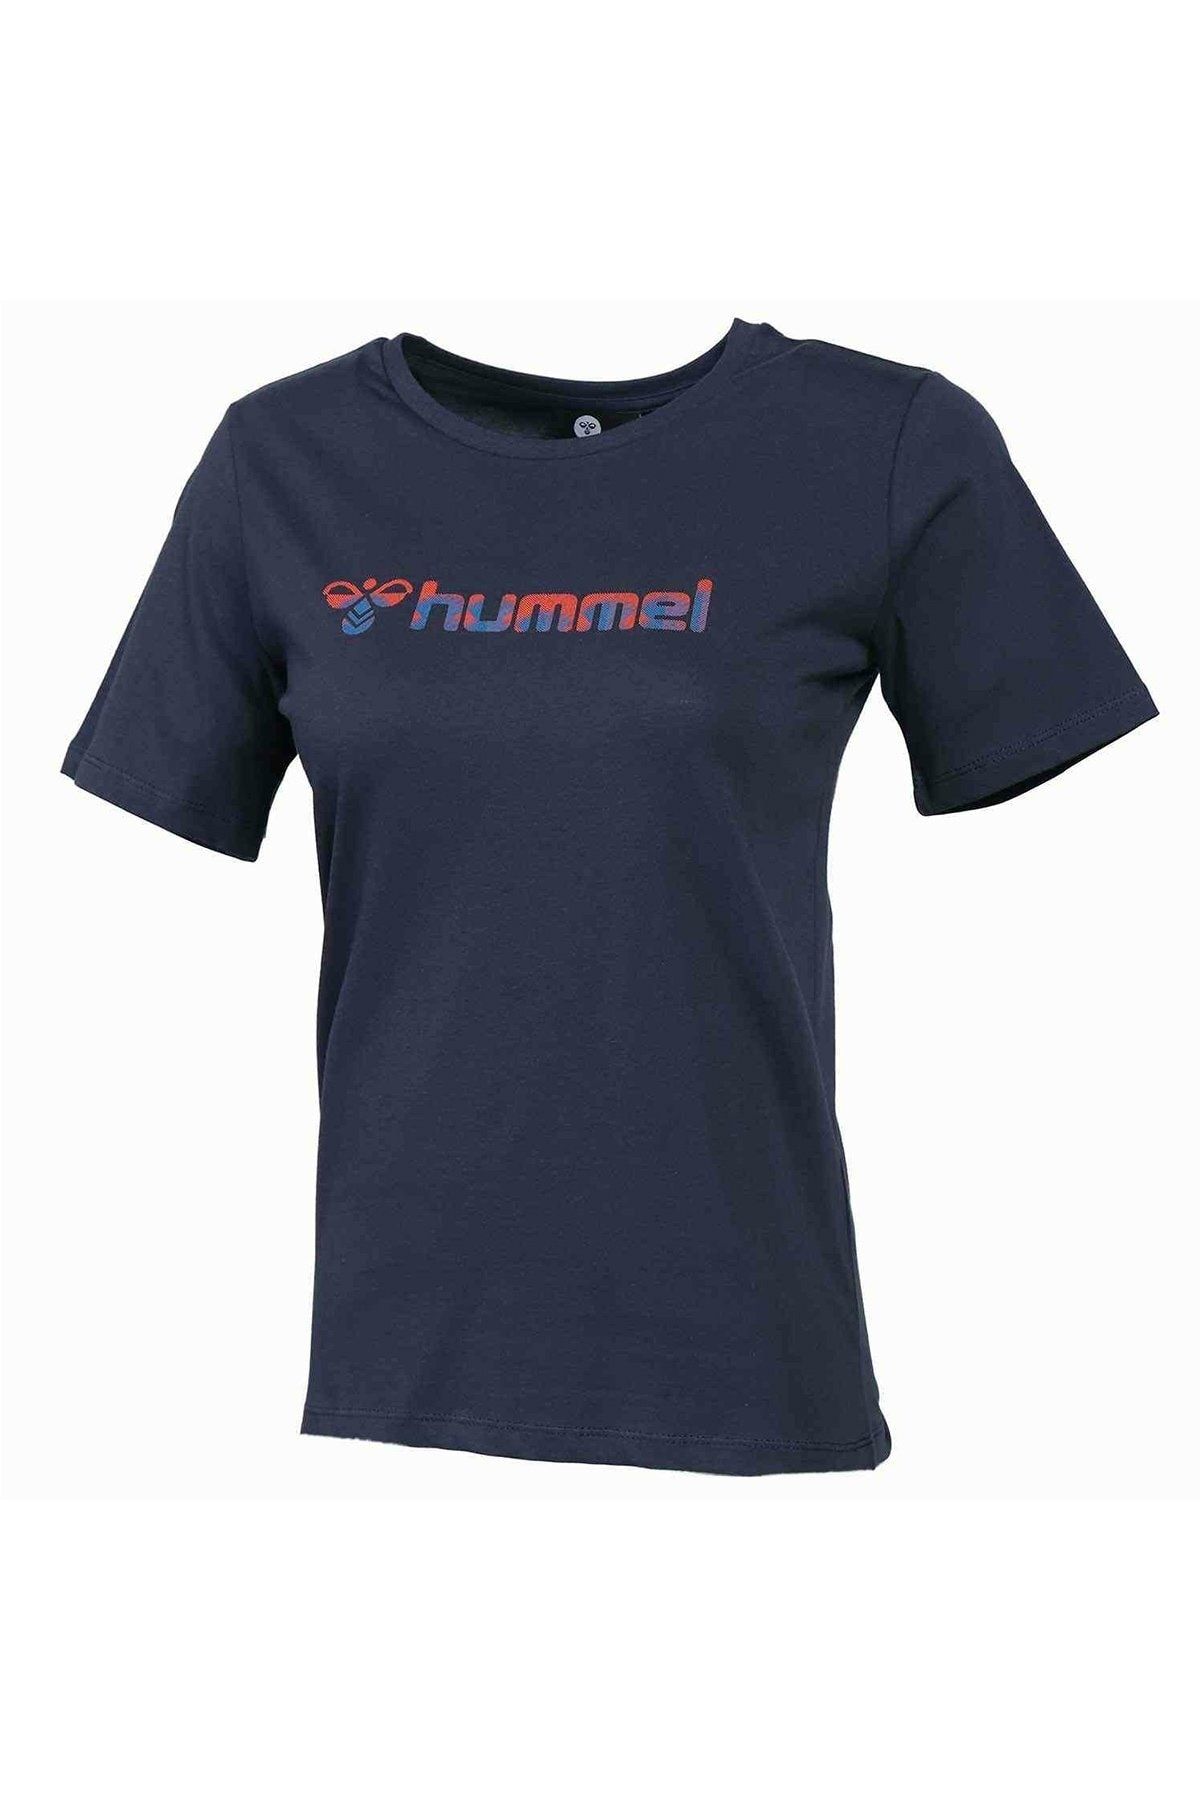 hummel تی شرت آبی میمی نیروی دریایی 911331-7429